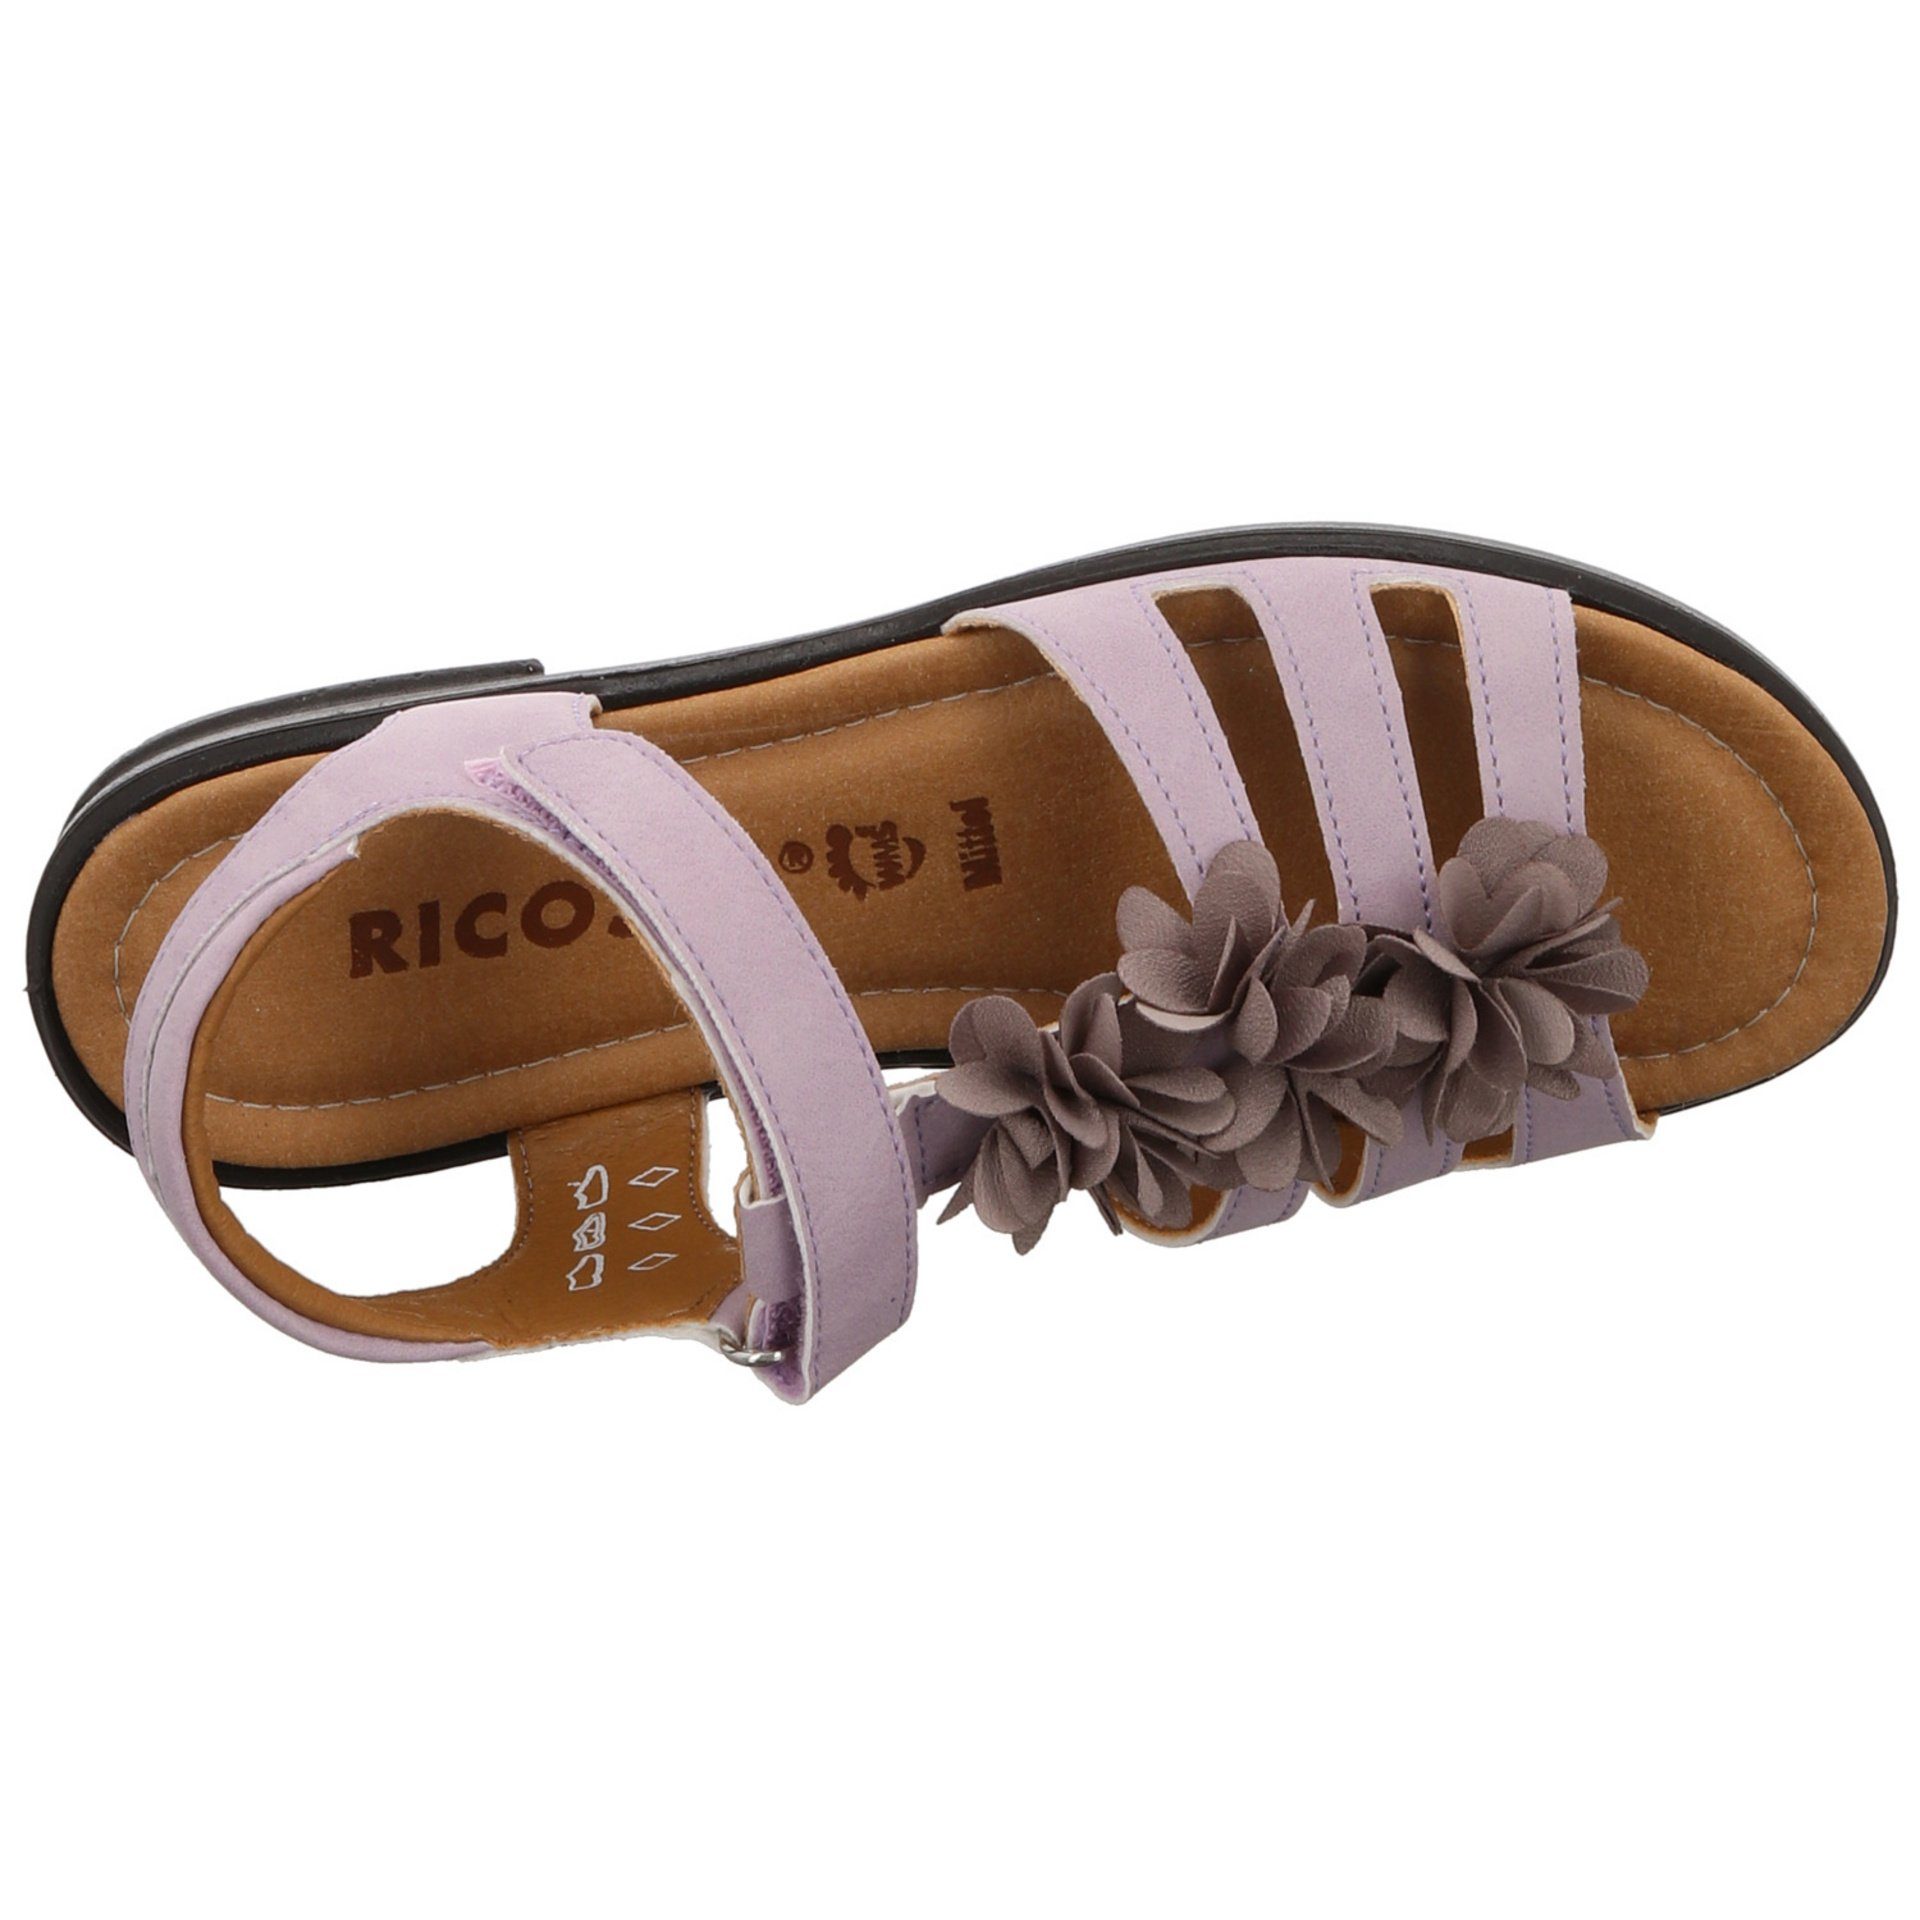 Schuhe Ricosta Aurora Sandale Sandale Synthetik hell rot+lila Sandalen Mädchen